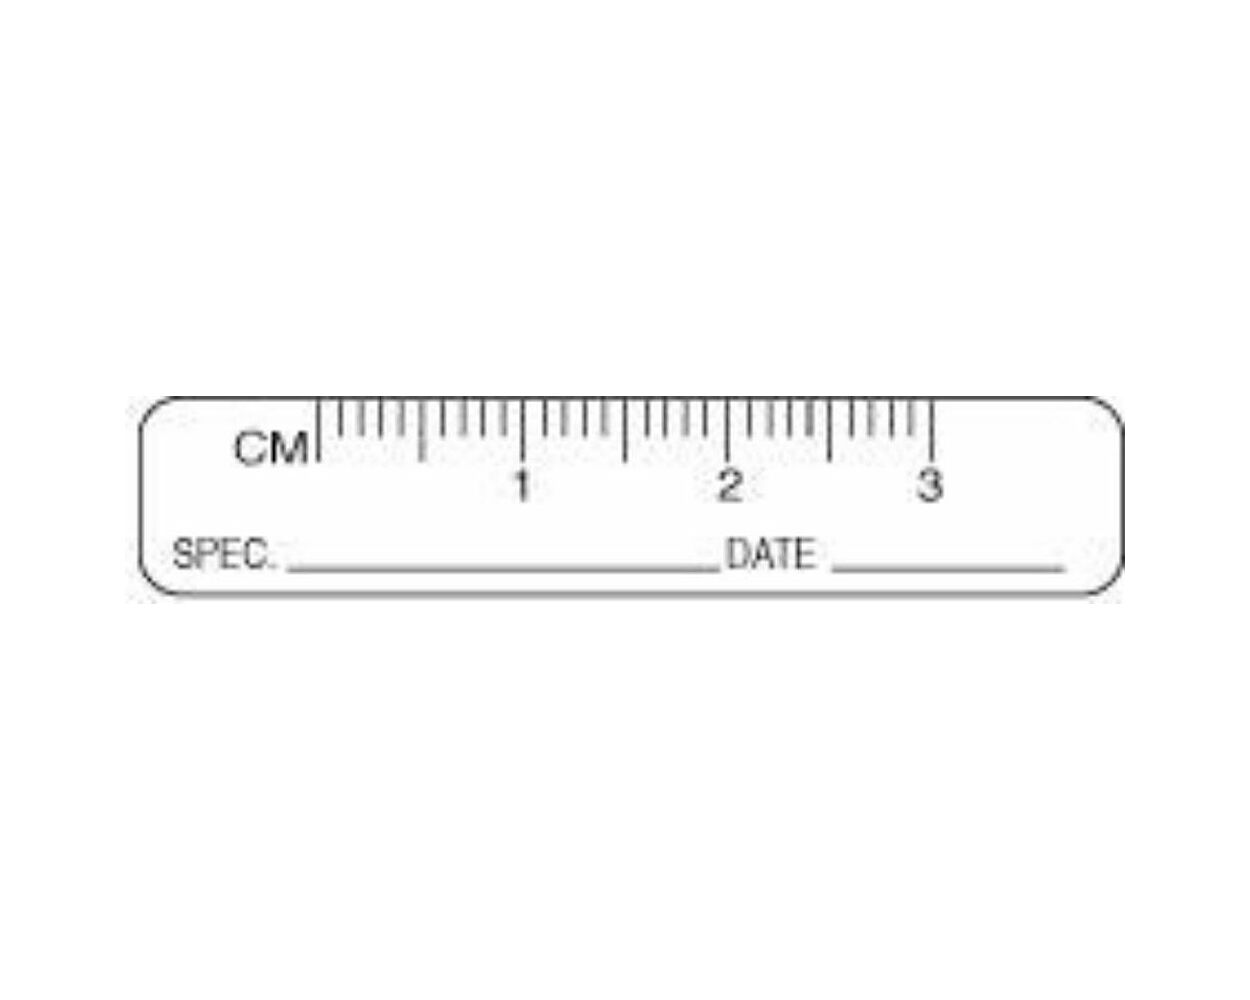 100 - Cardinal Health Disposable Paper Infant & Head Measuring Tape Ruler  24